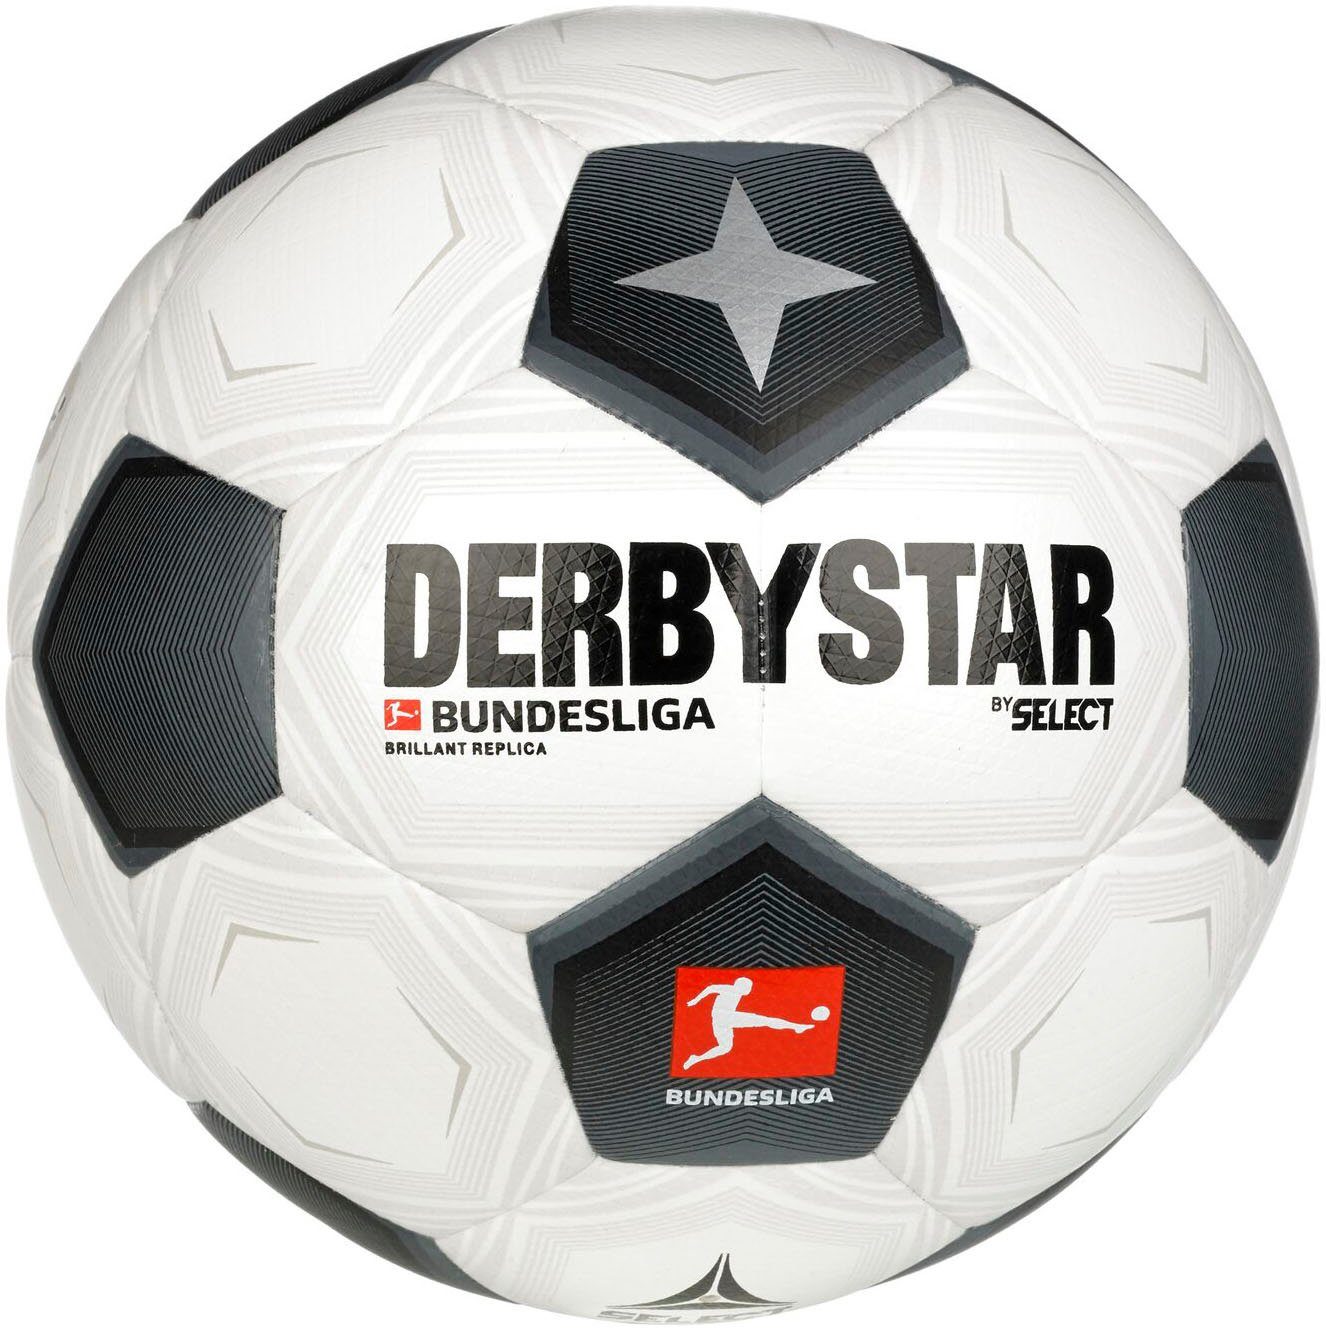 Derbystar Fußball Bundesliga Brillant Classic Replica